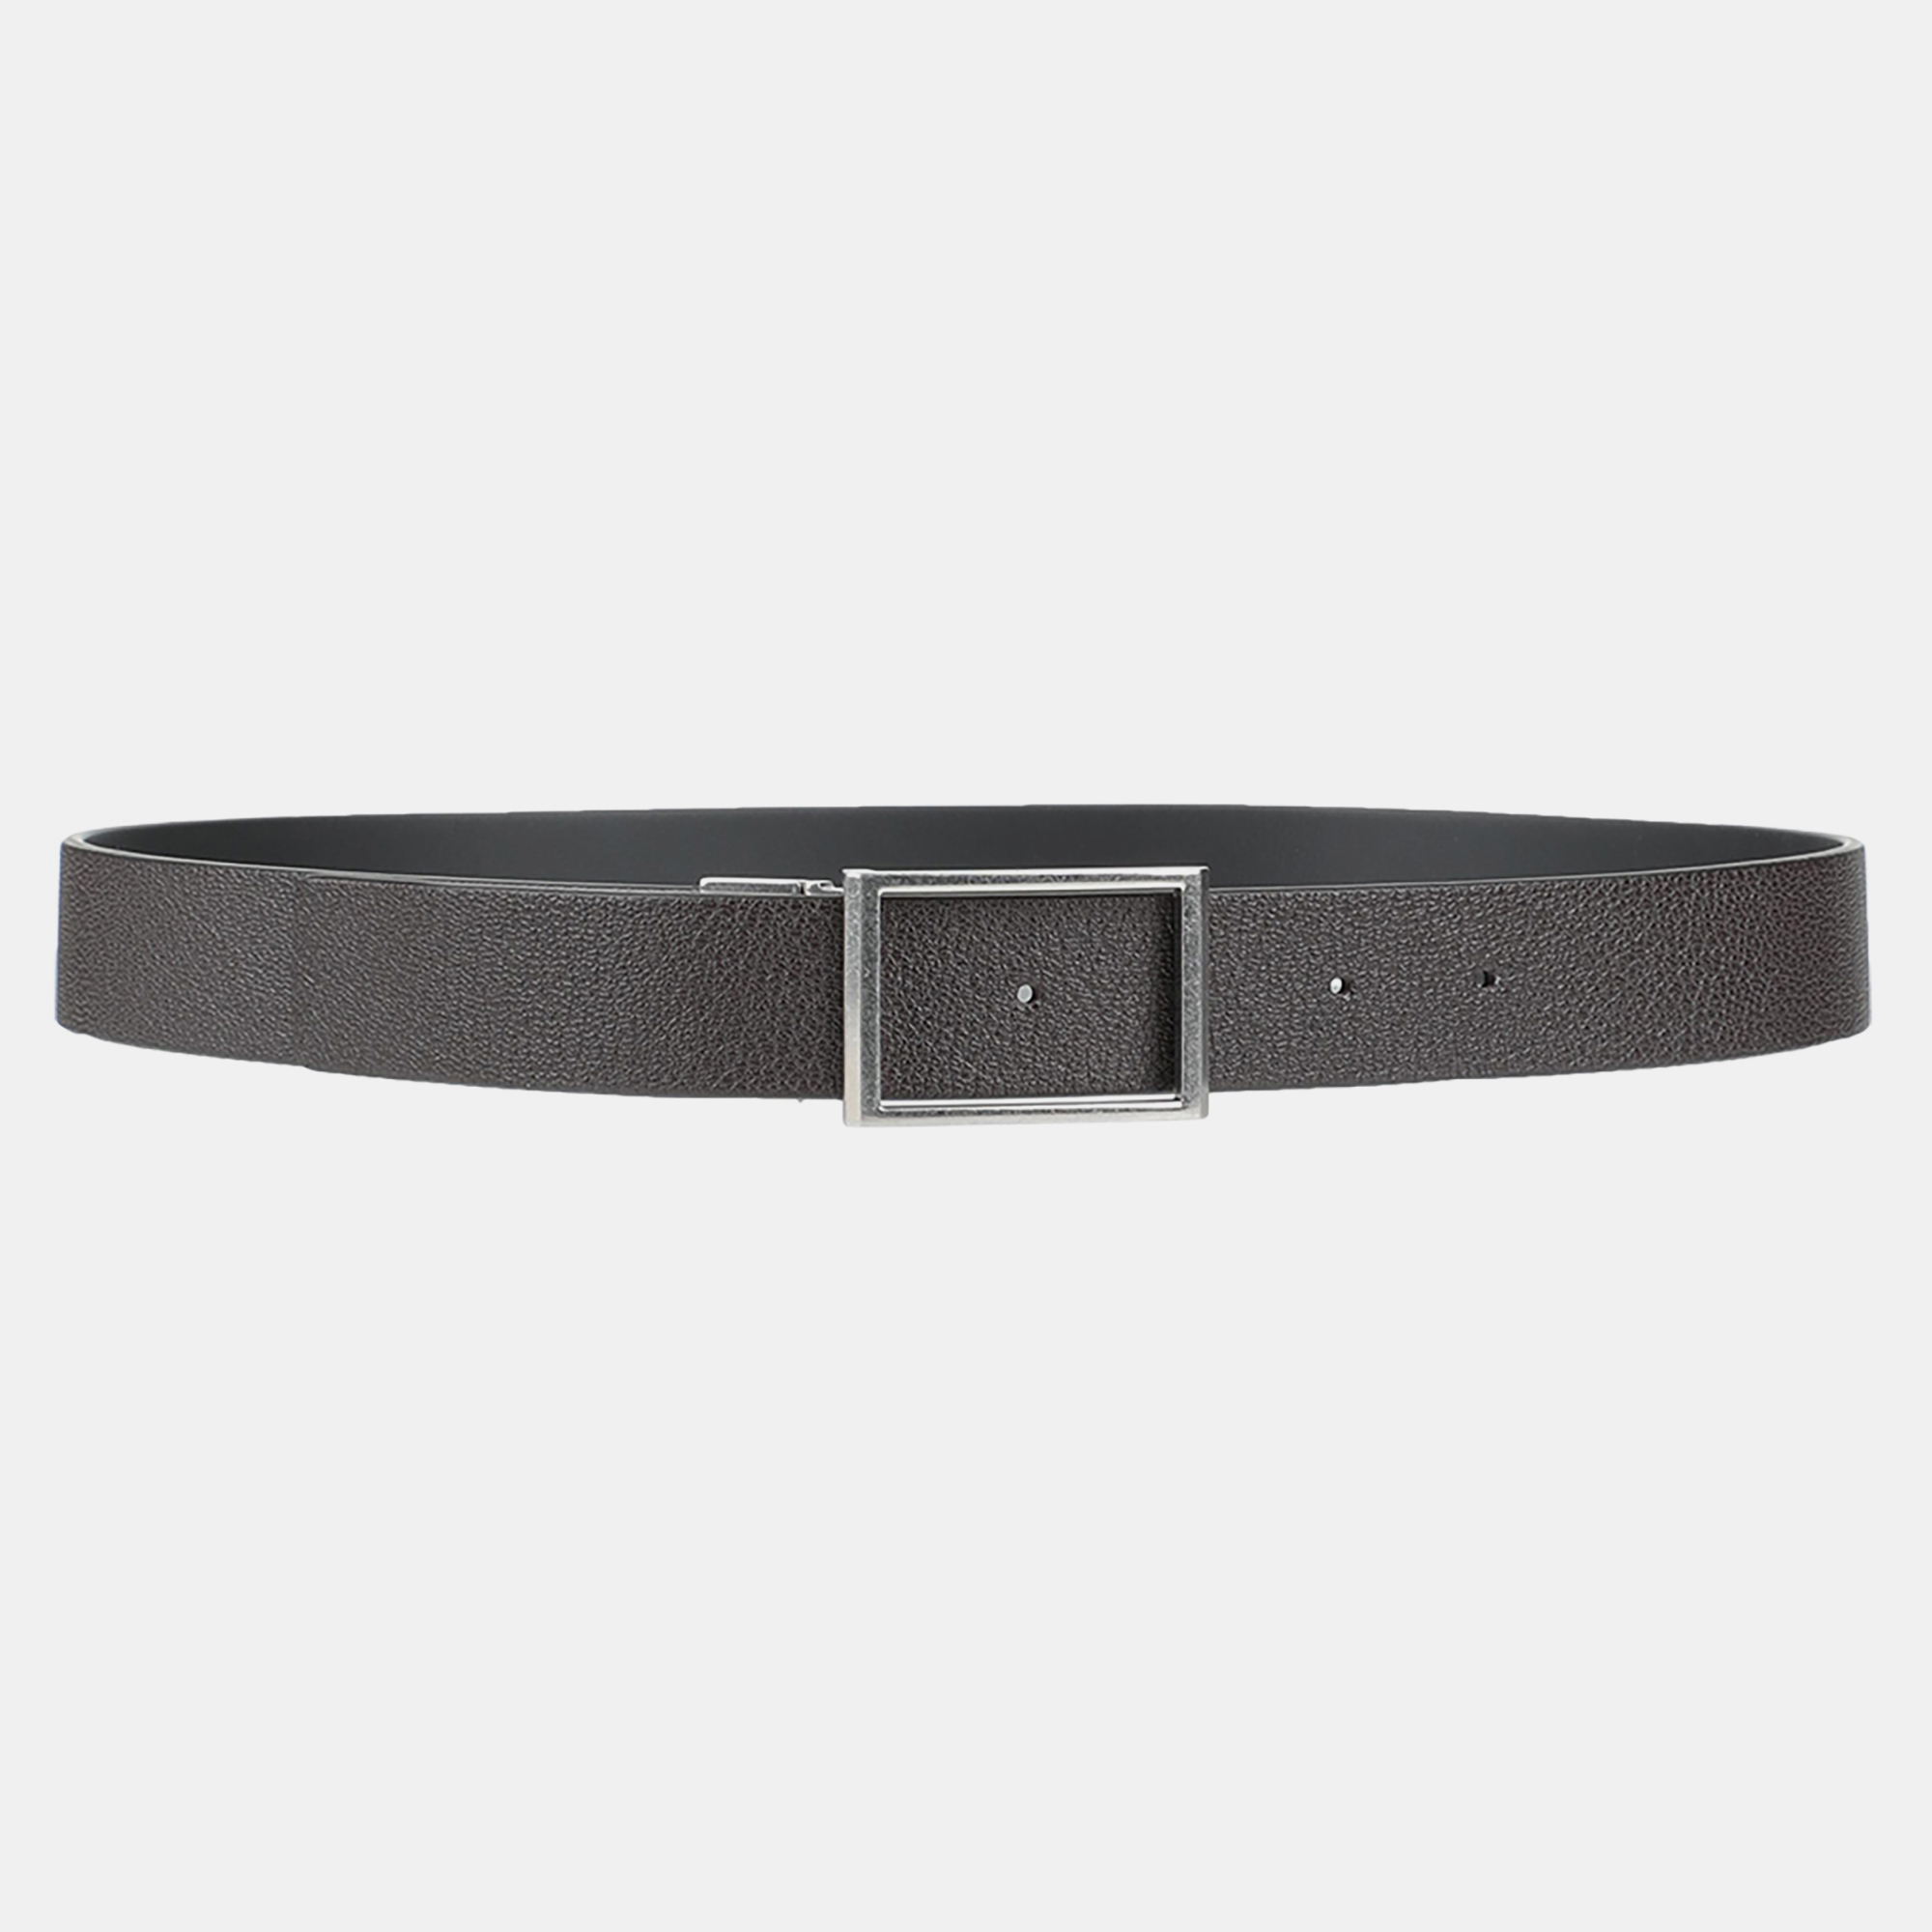 Bottega veneta leather belt 95